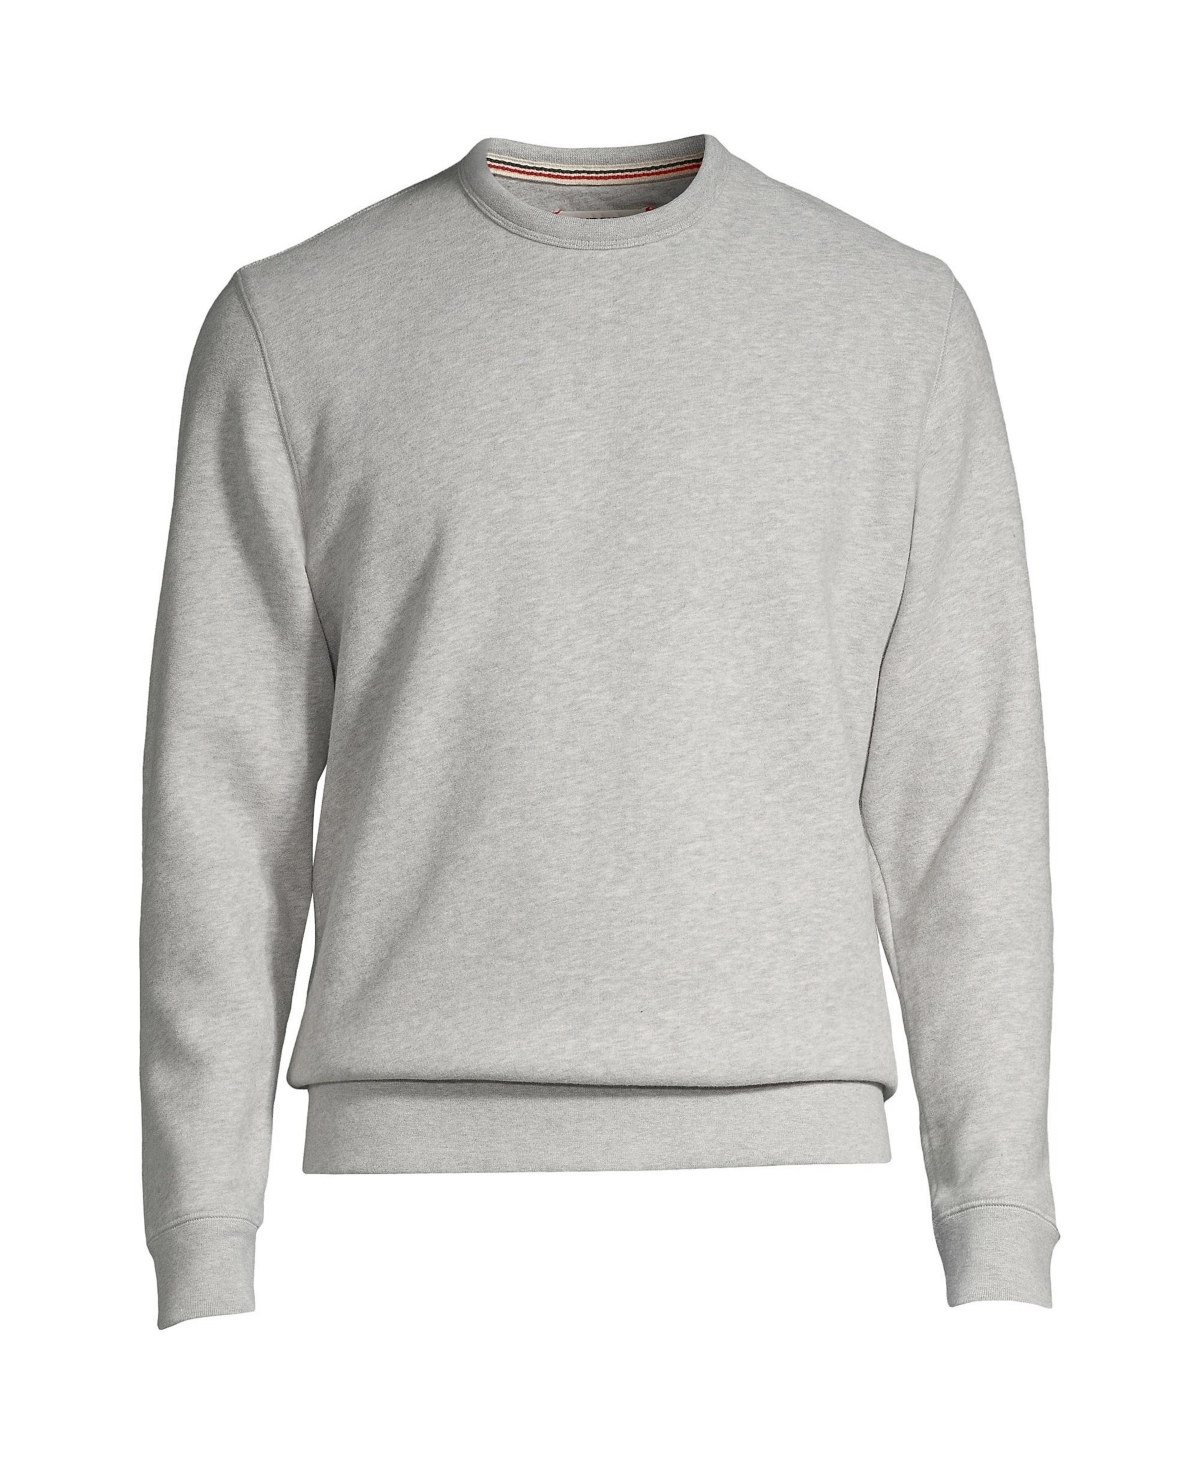 Men's Long Sleeve Serious Sweats Crewneck Sweatshirt - Black